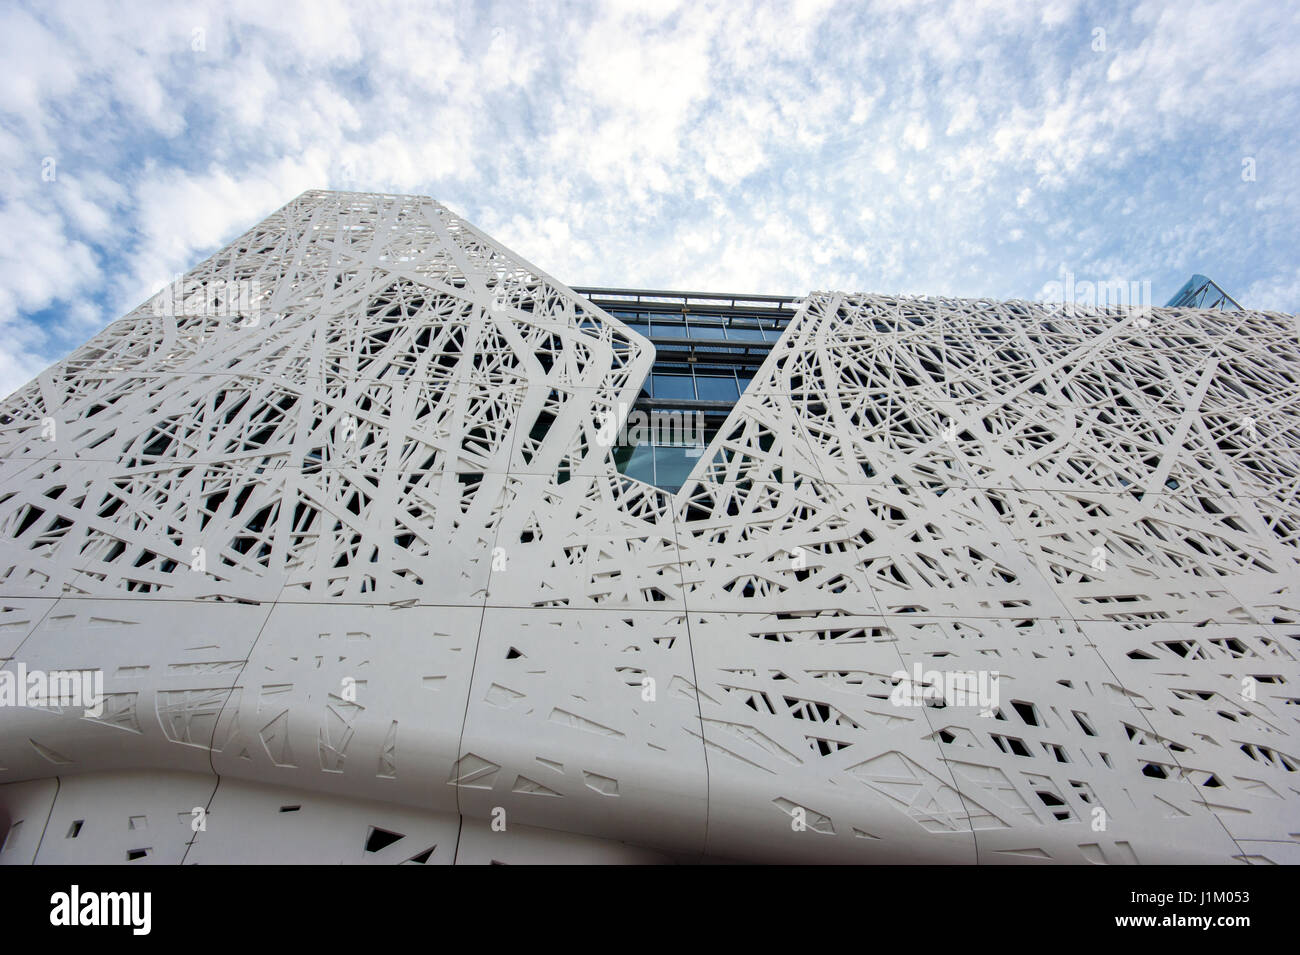 Italian Pavilion at the Expo Milan 2015 universal exposition, design by Nemesi architects Stock Photo